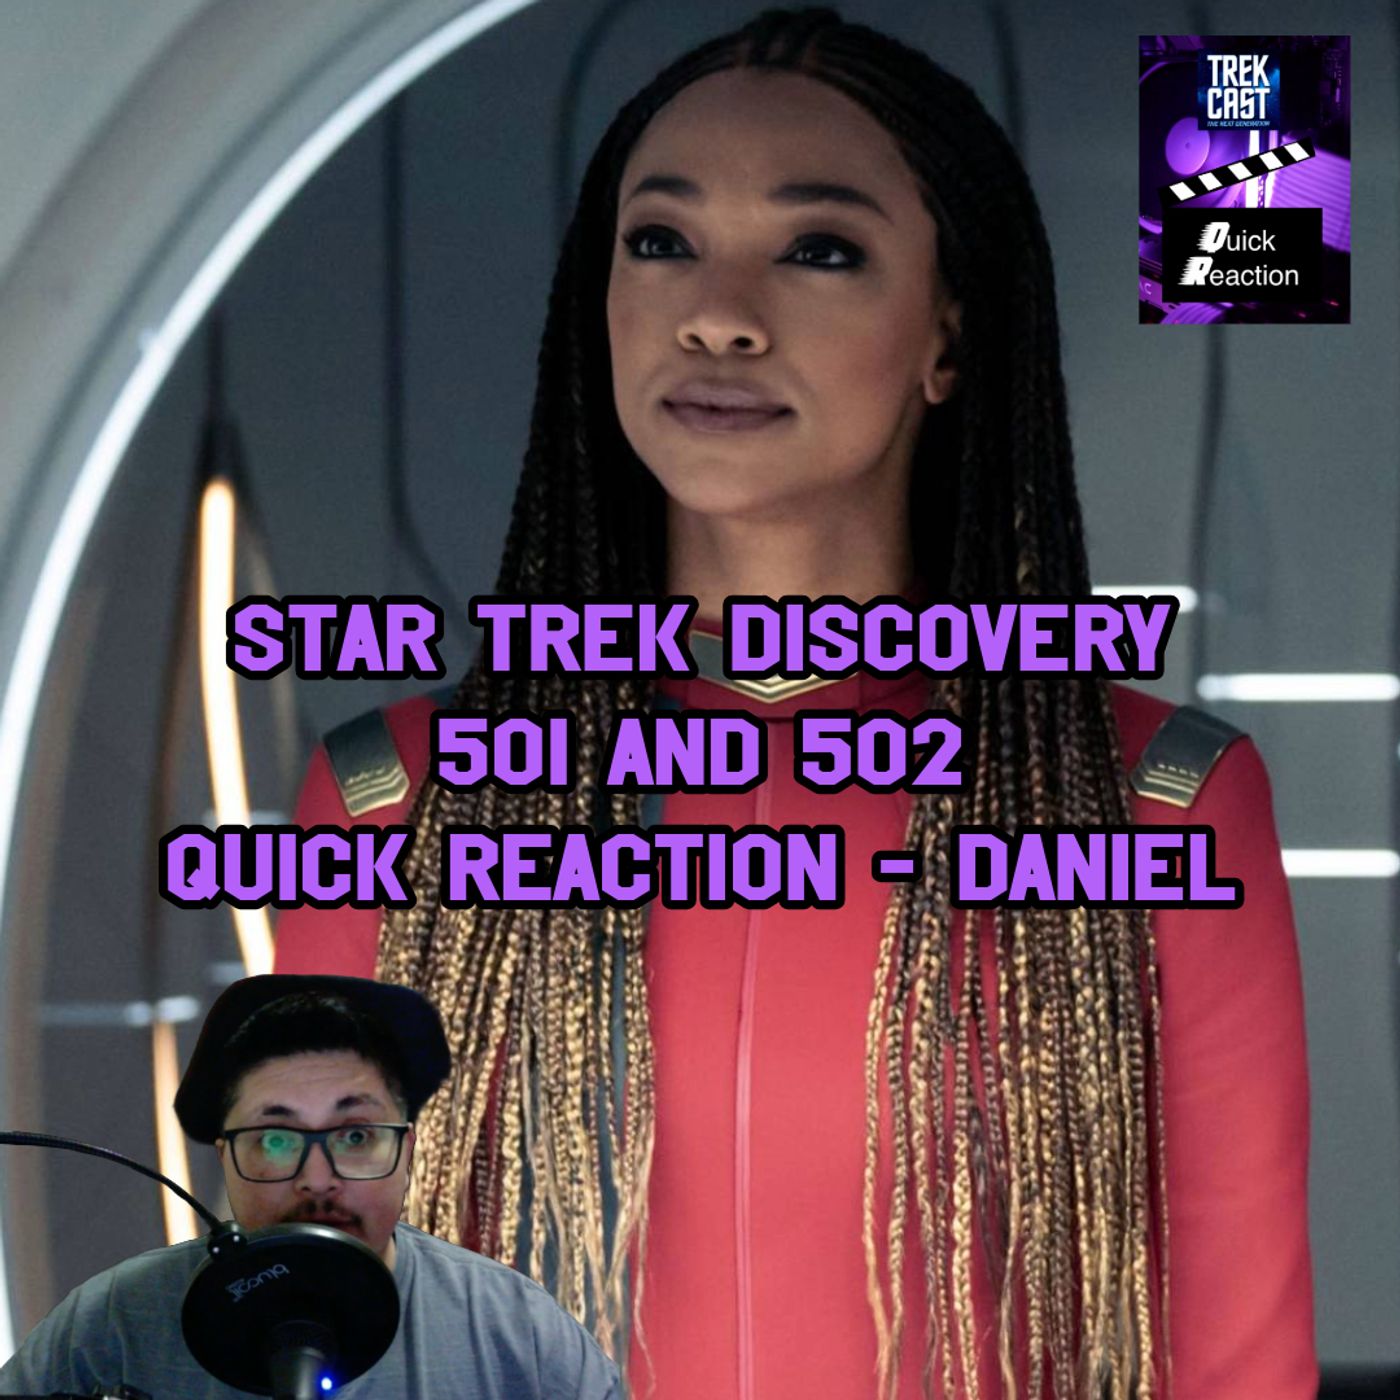 Daniel's Star Trek Discovery 501 and 502 QUICK REACTION, 2 episode season premiere!